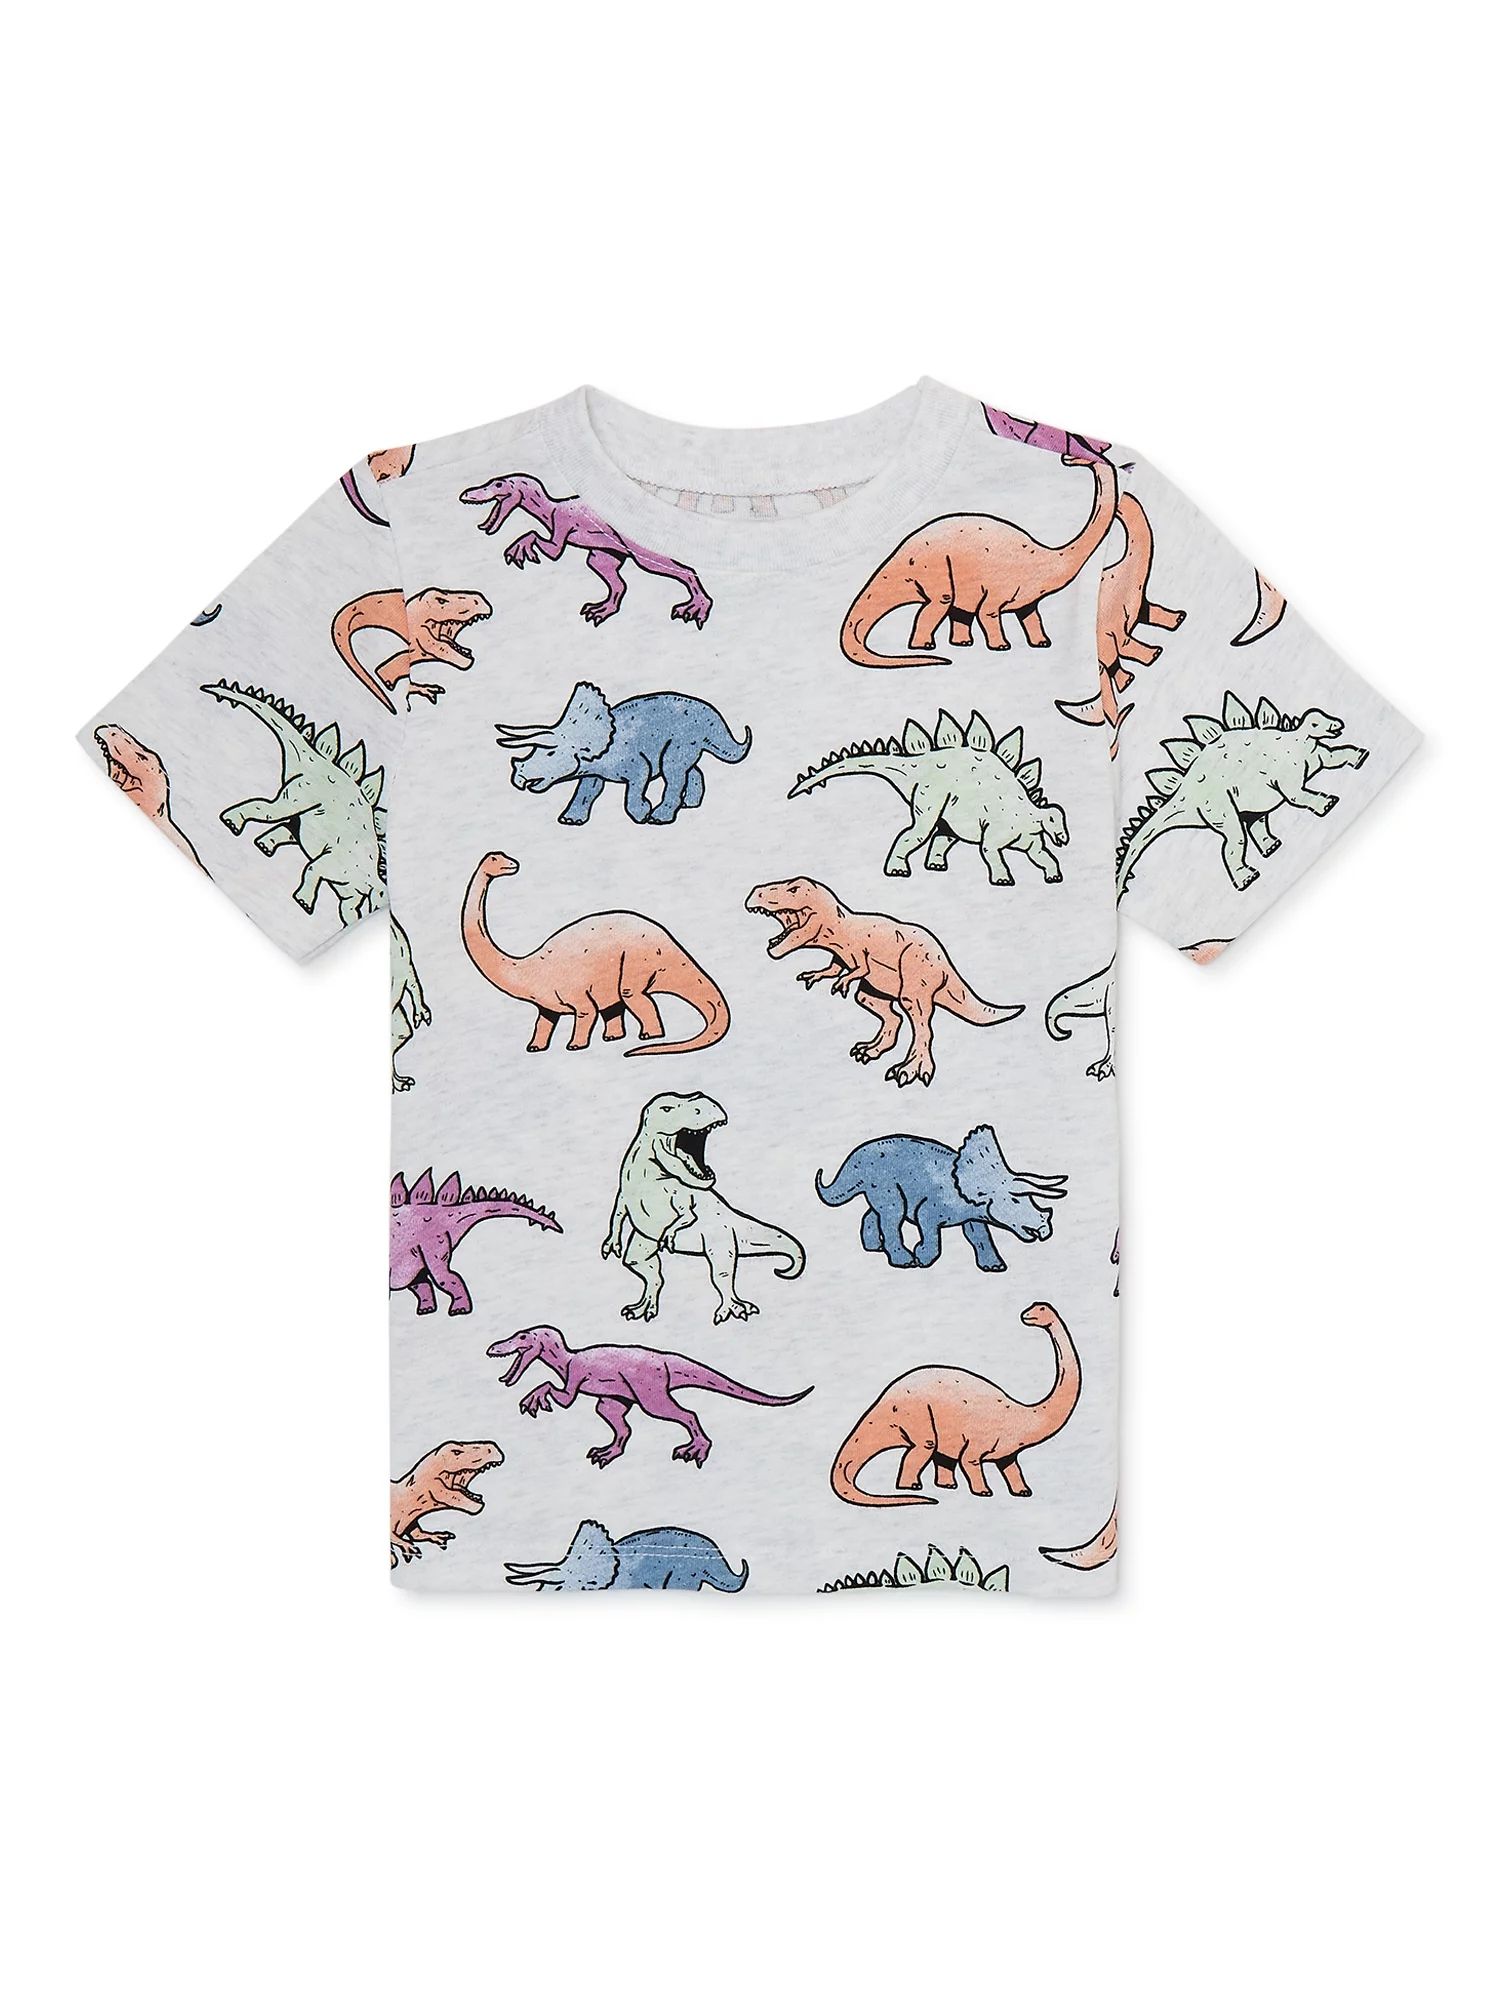 Garanimals Toddler Boy Short Sleeve Print T-Shirt, Sizes 12 Months-5T | Walmart (US)